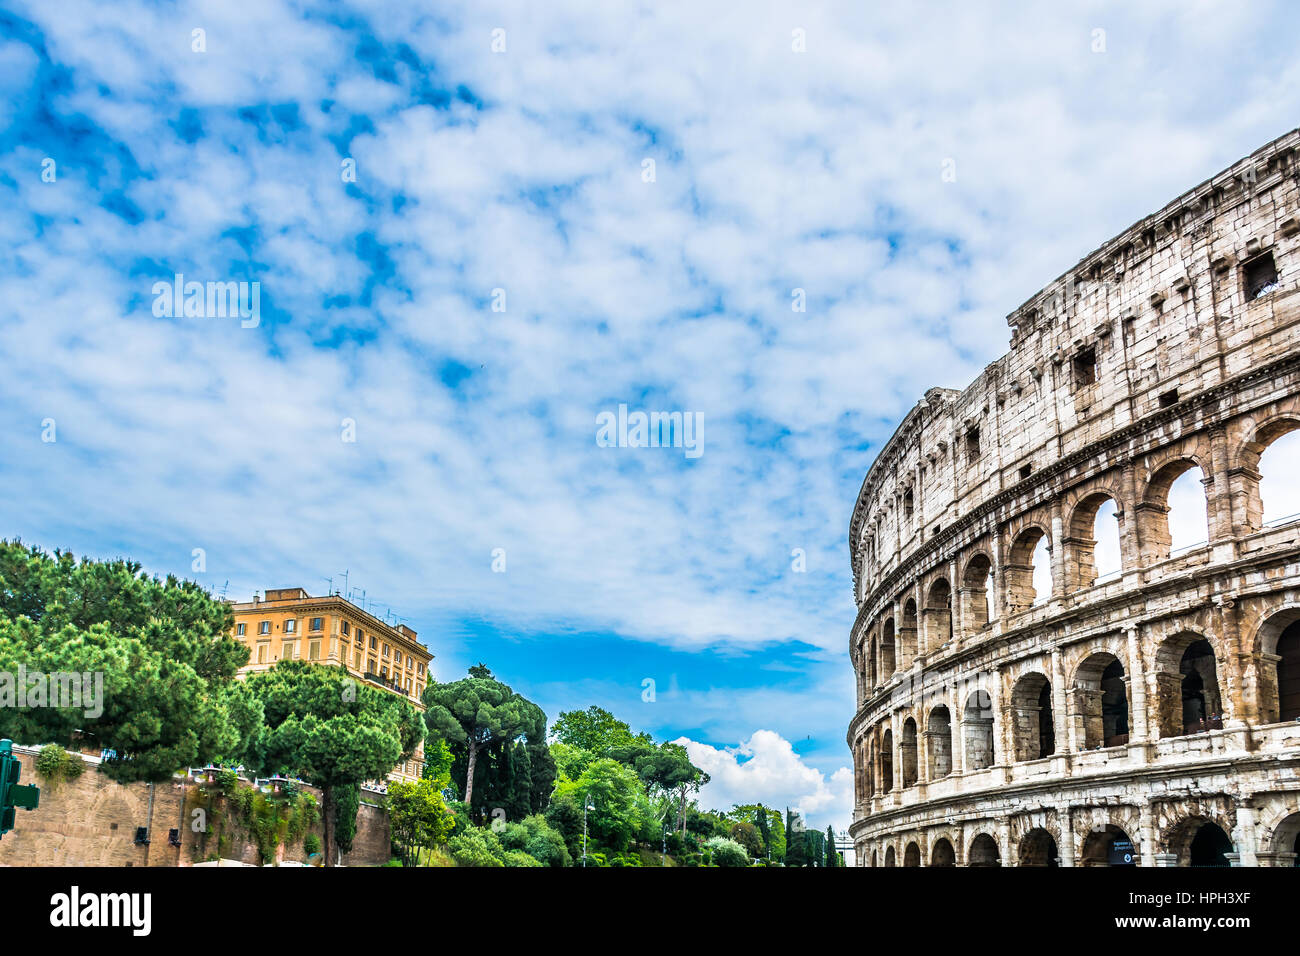 Famous landmark in Rome city, popular touristic destination in Europe. Stock Photo